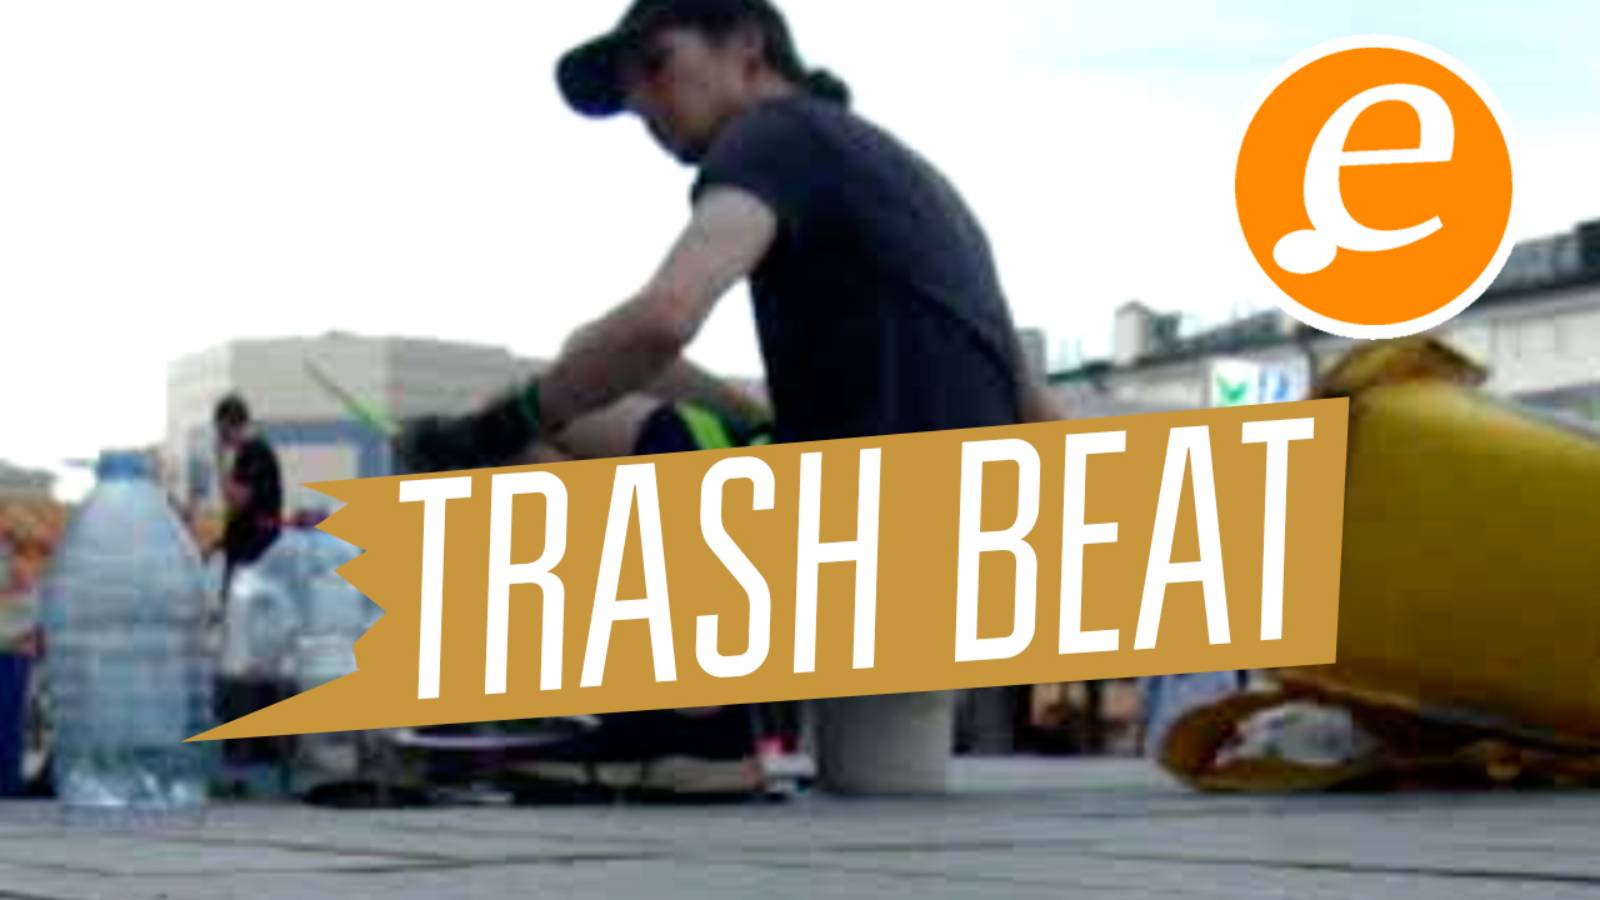 Trash Beat / уличный барабанщик